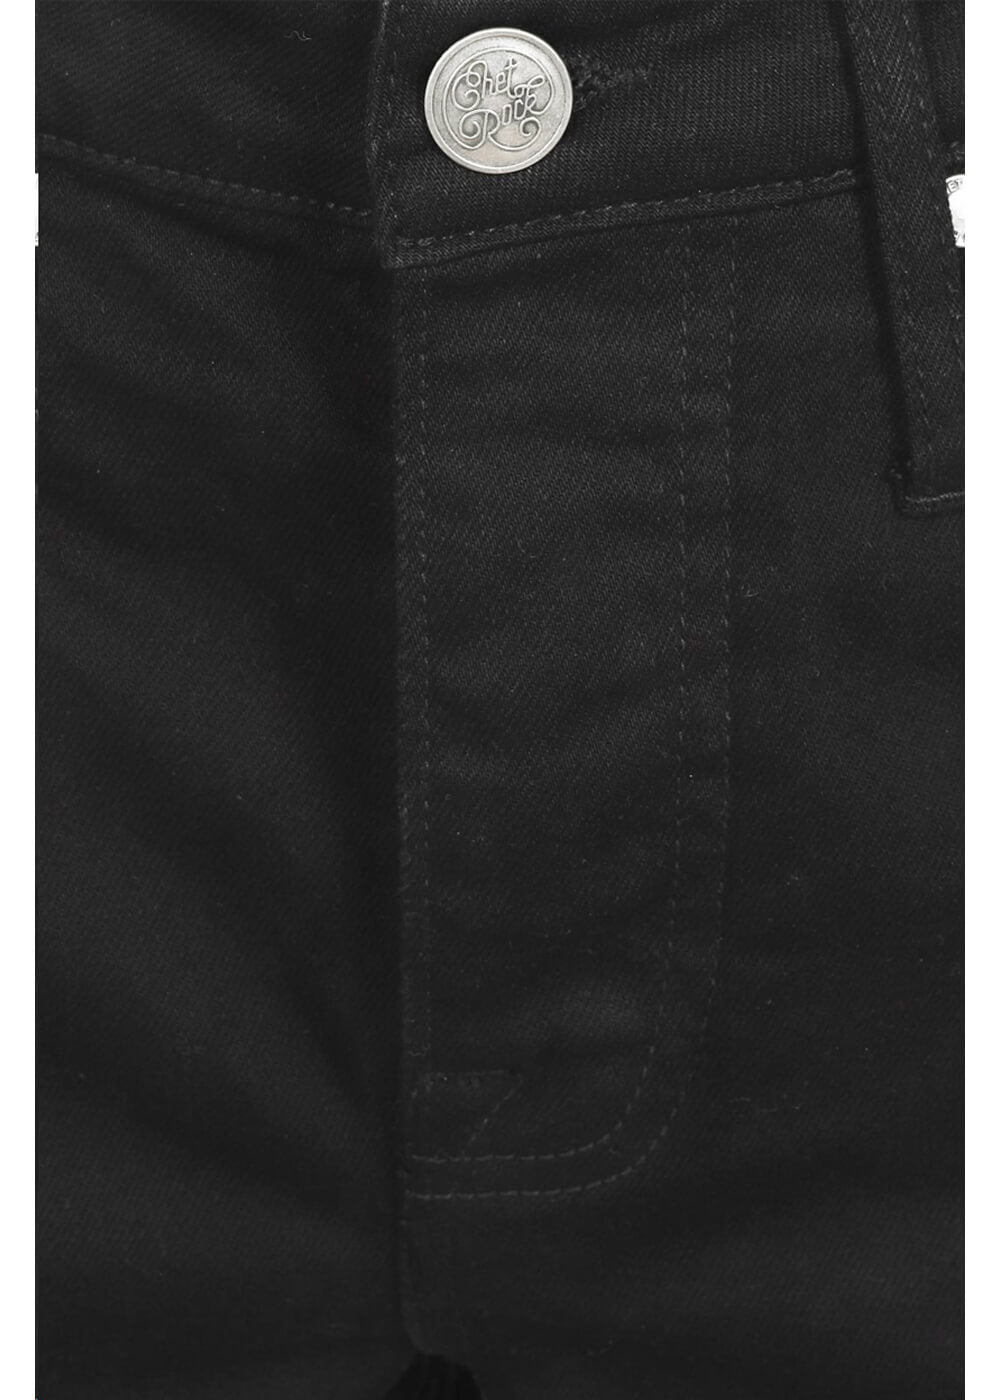 Chet Rock Mens Rockstar Jeans Black – www.succubus.com